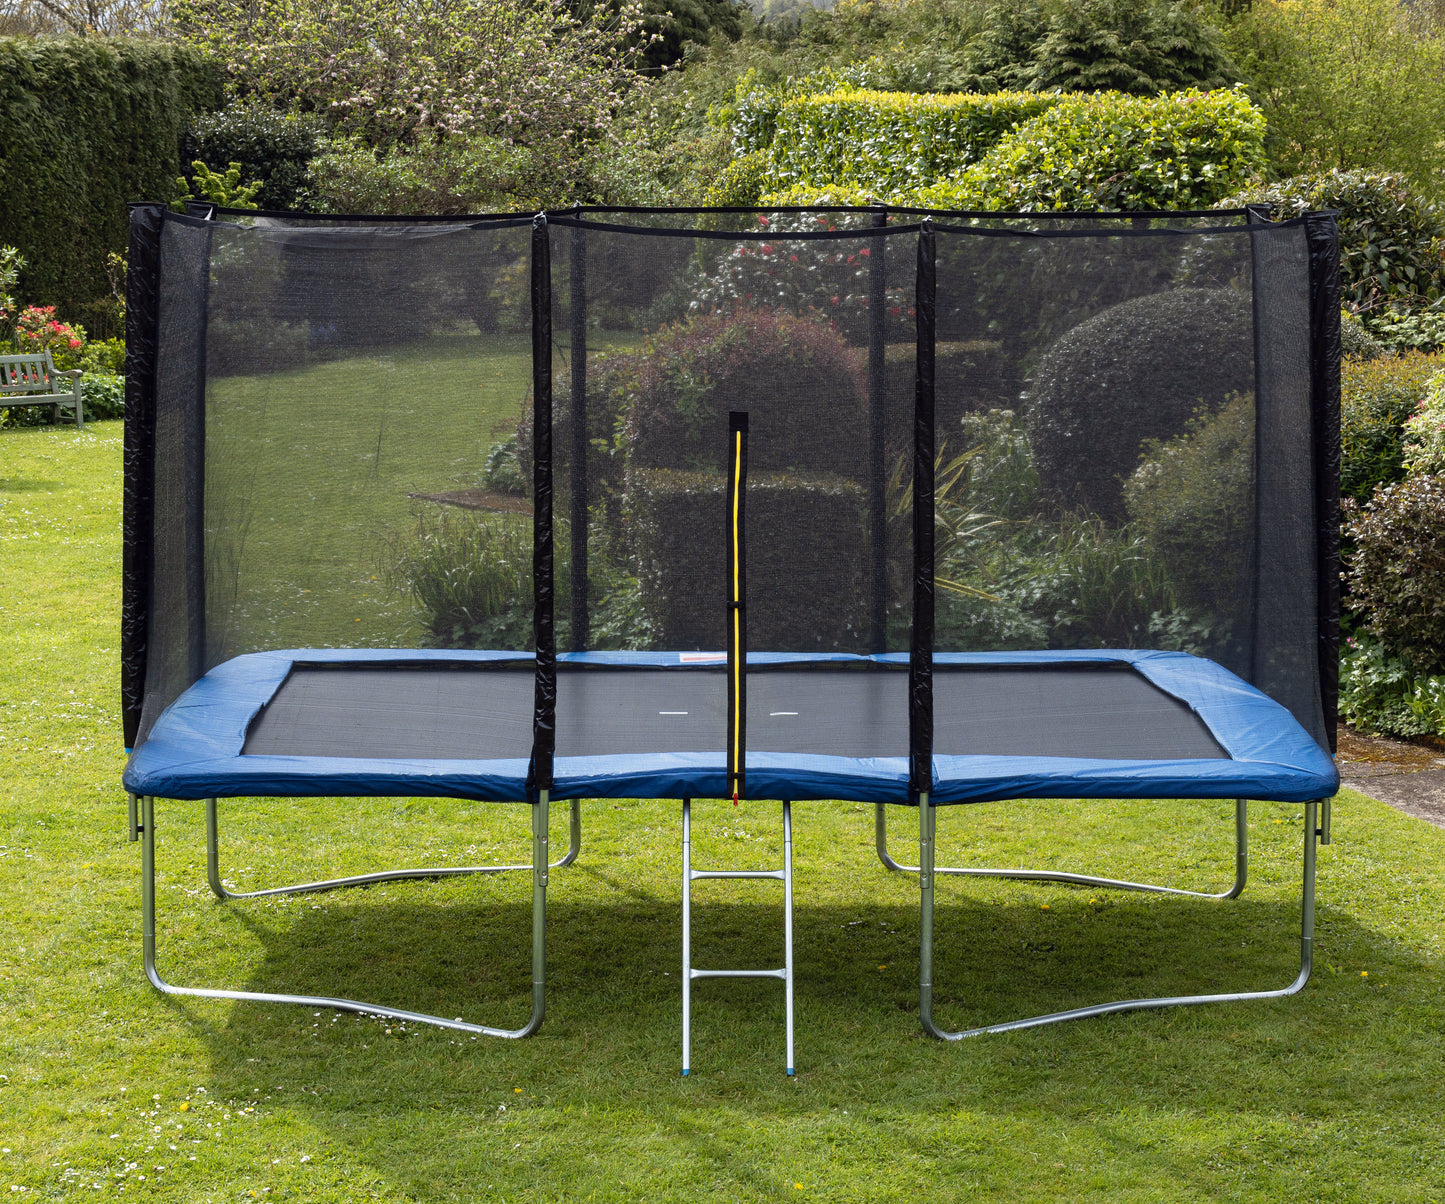 Kanga Blue 8x12ft trampoline package